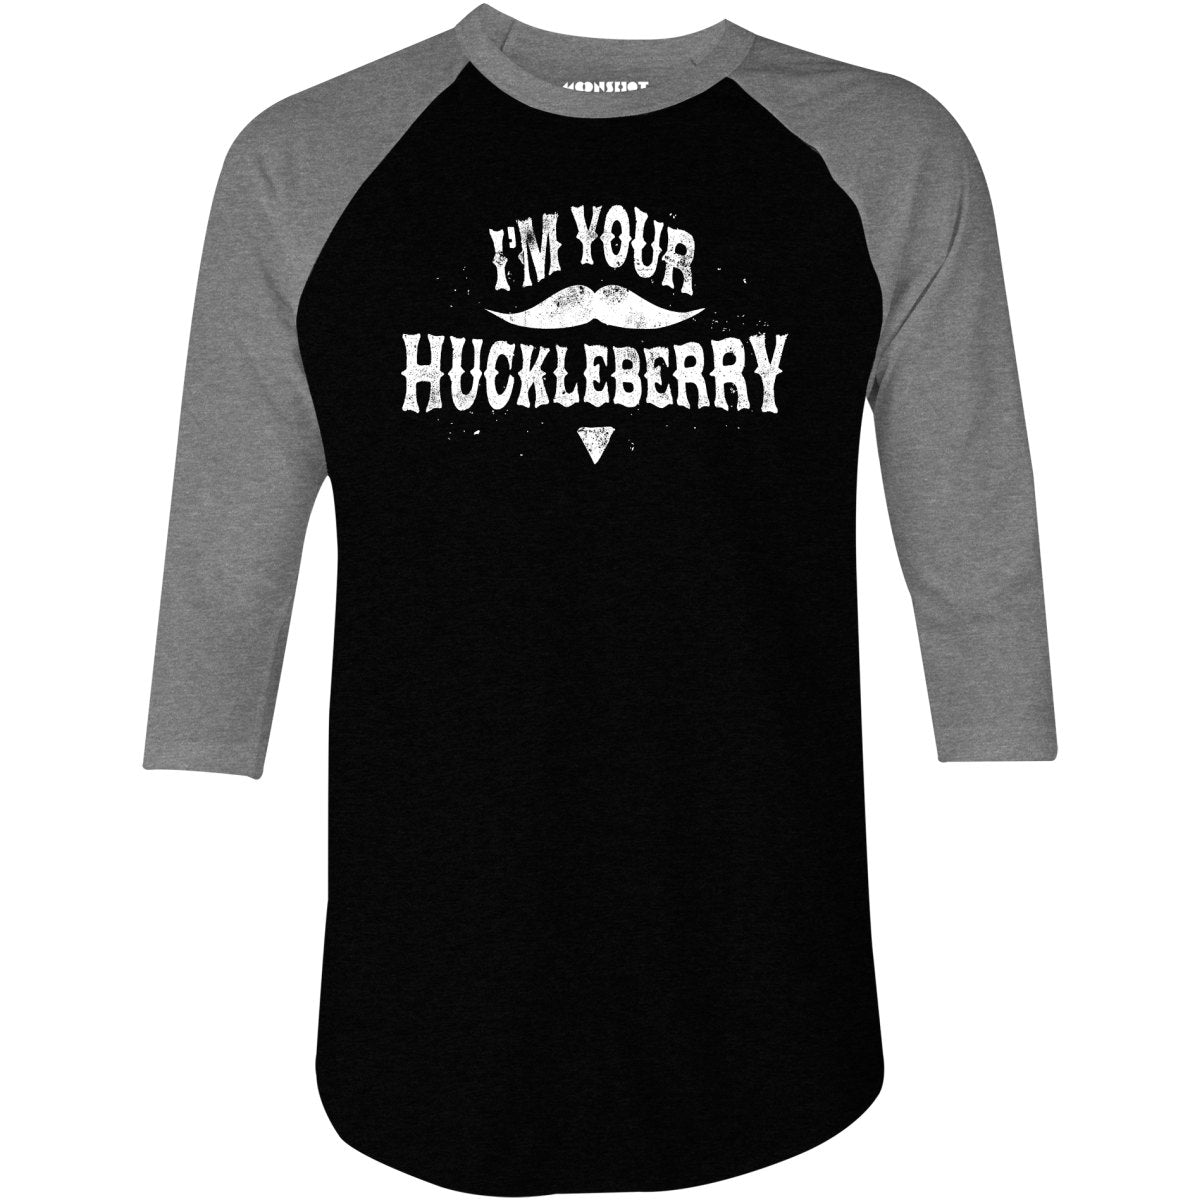 I'm Your Huckleberry - 3/4 Sleeve Raglan T-Shirt